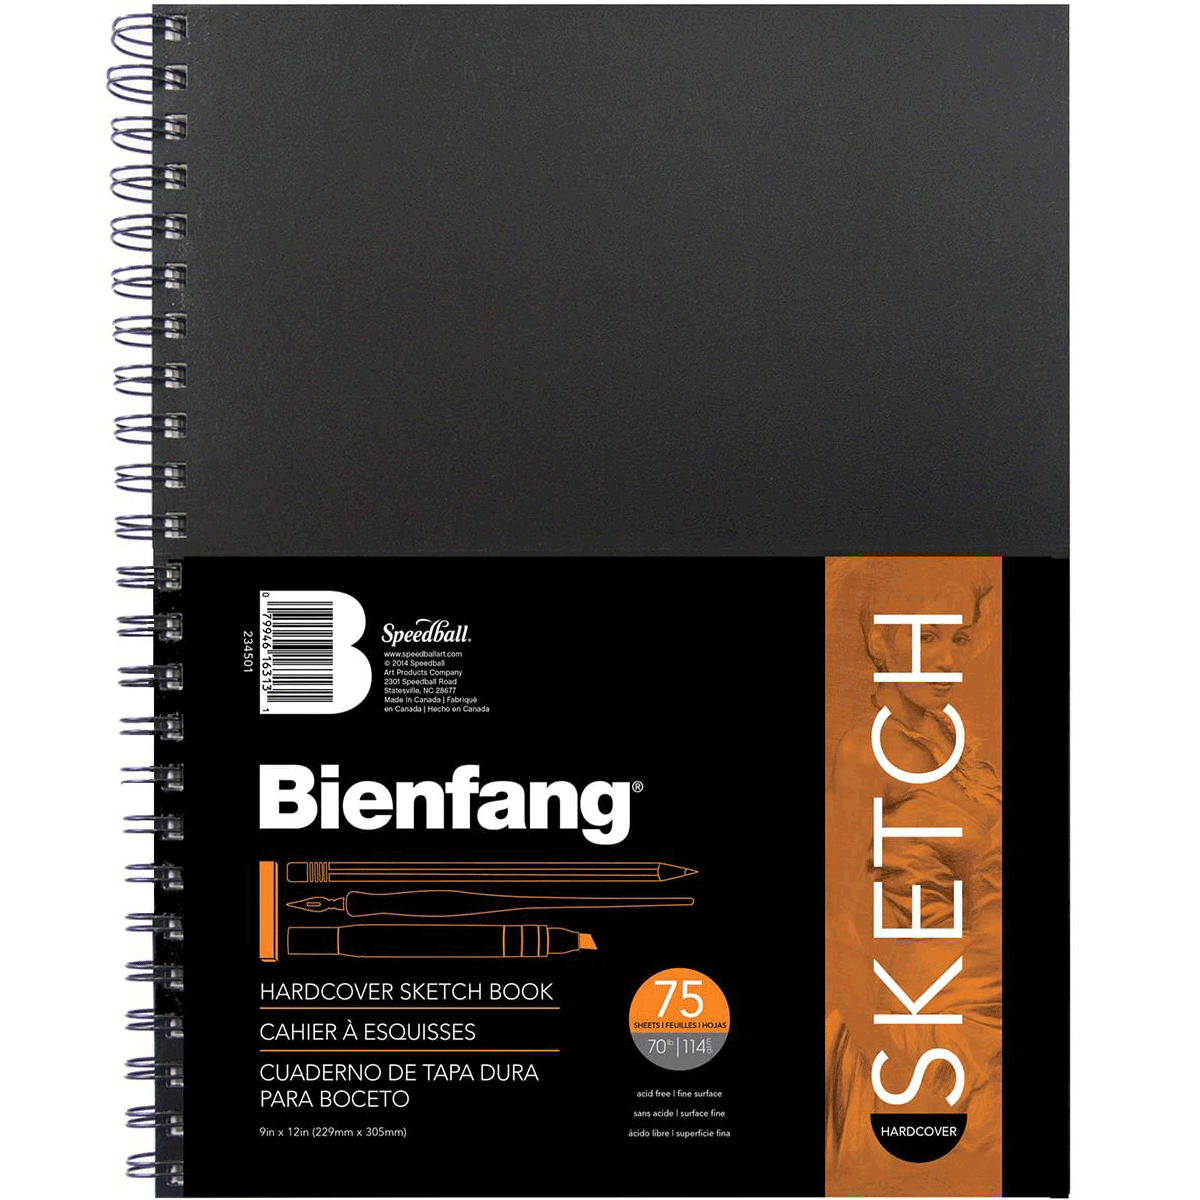 Bienfang Hardcover Sketch Book 114gms/70lb 75 Sheets, 9 x 12 Inch